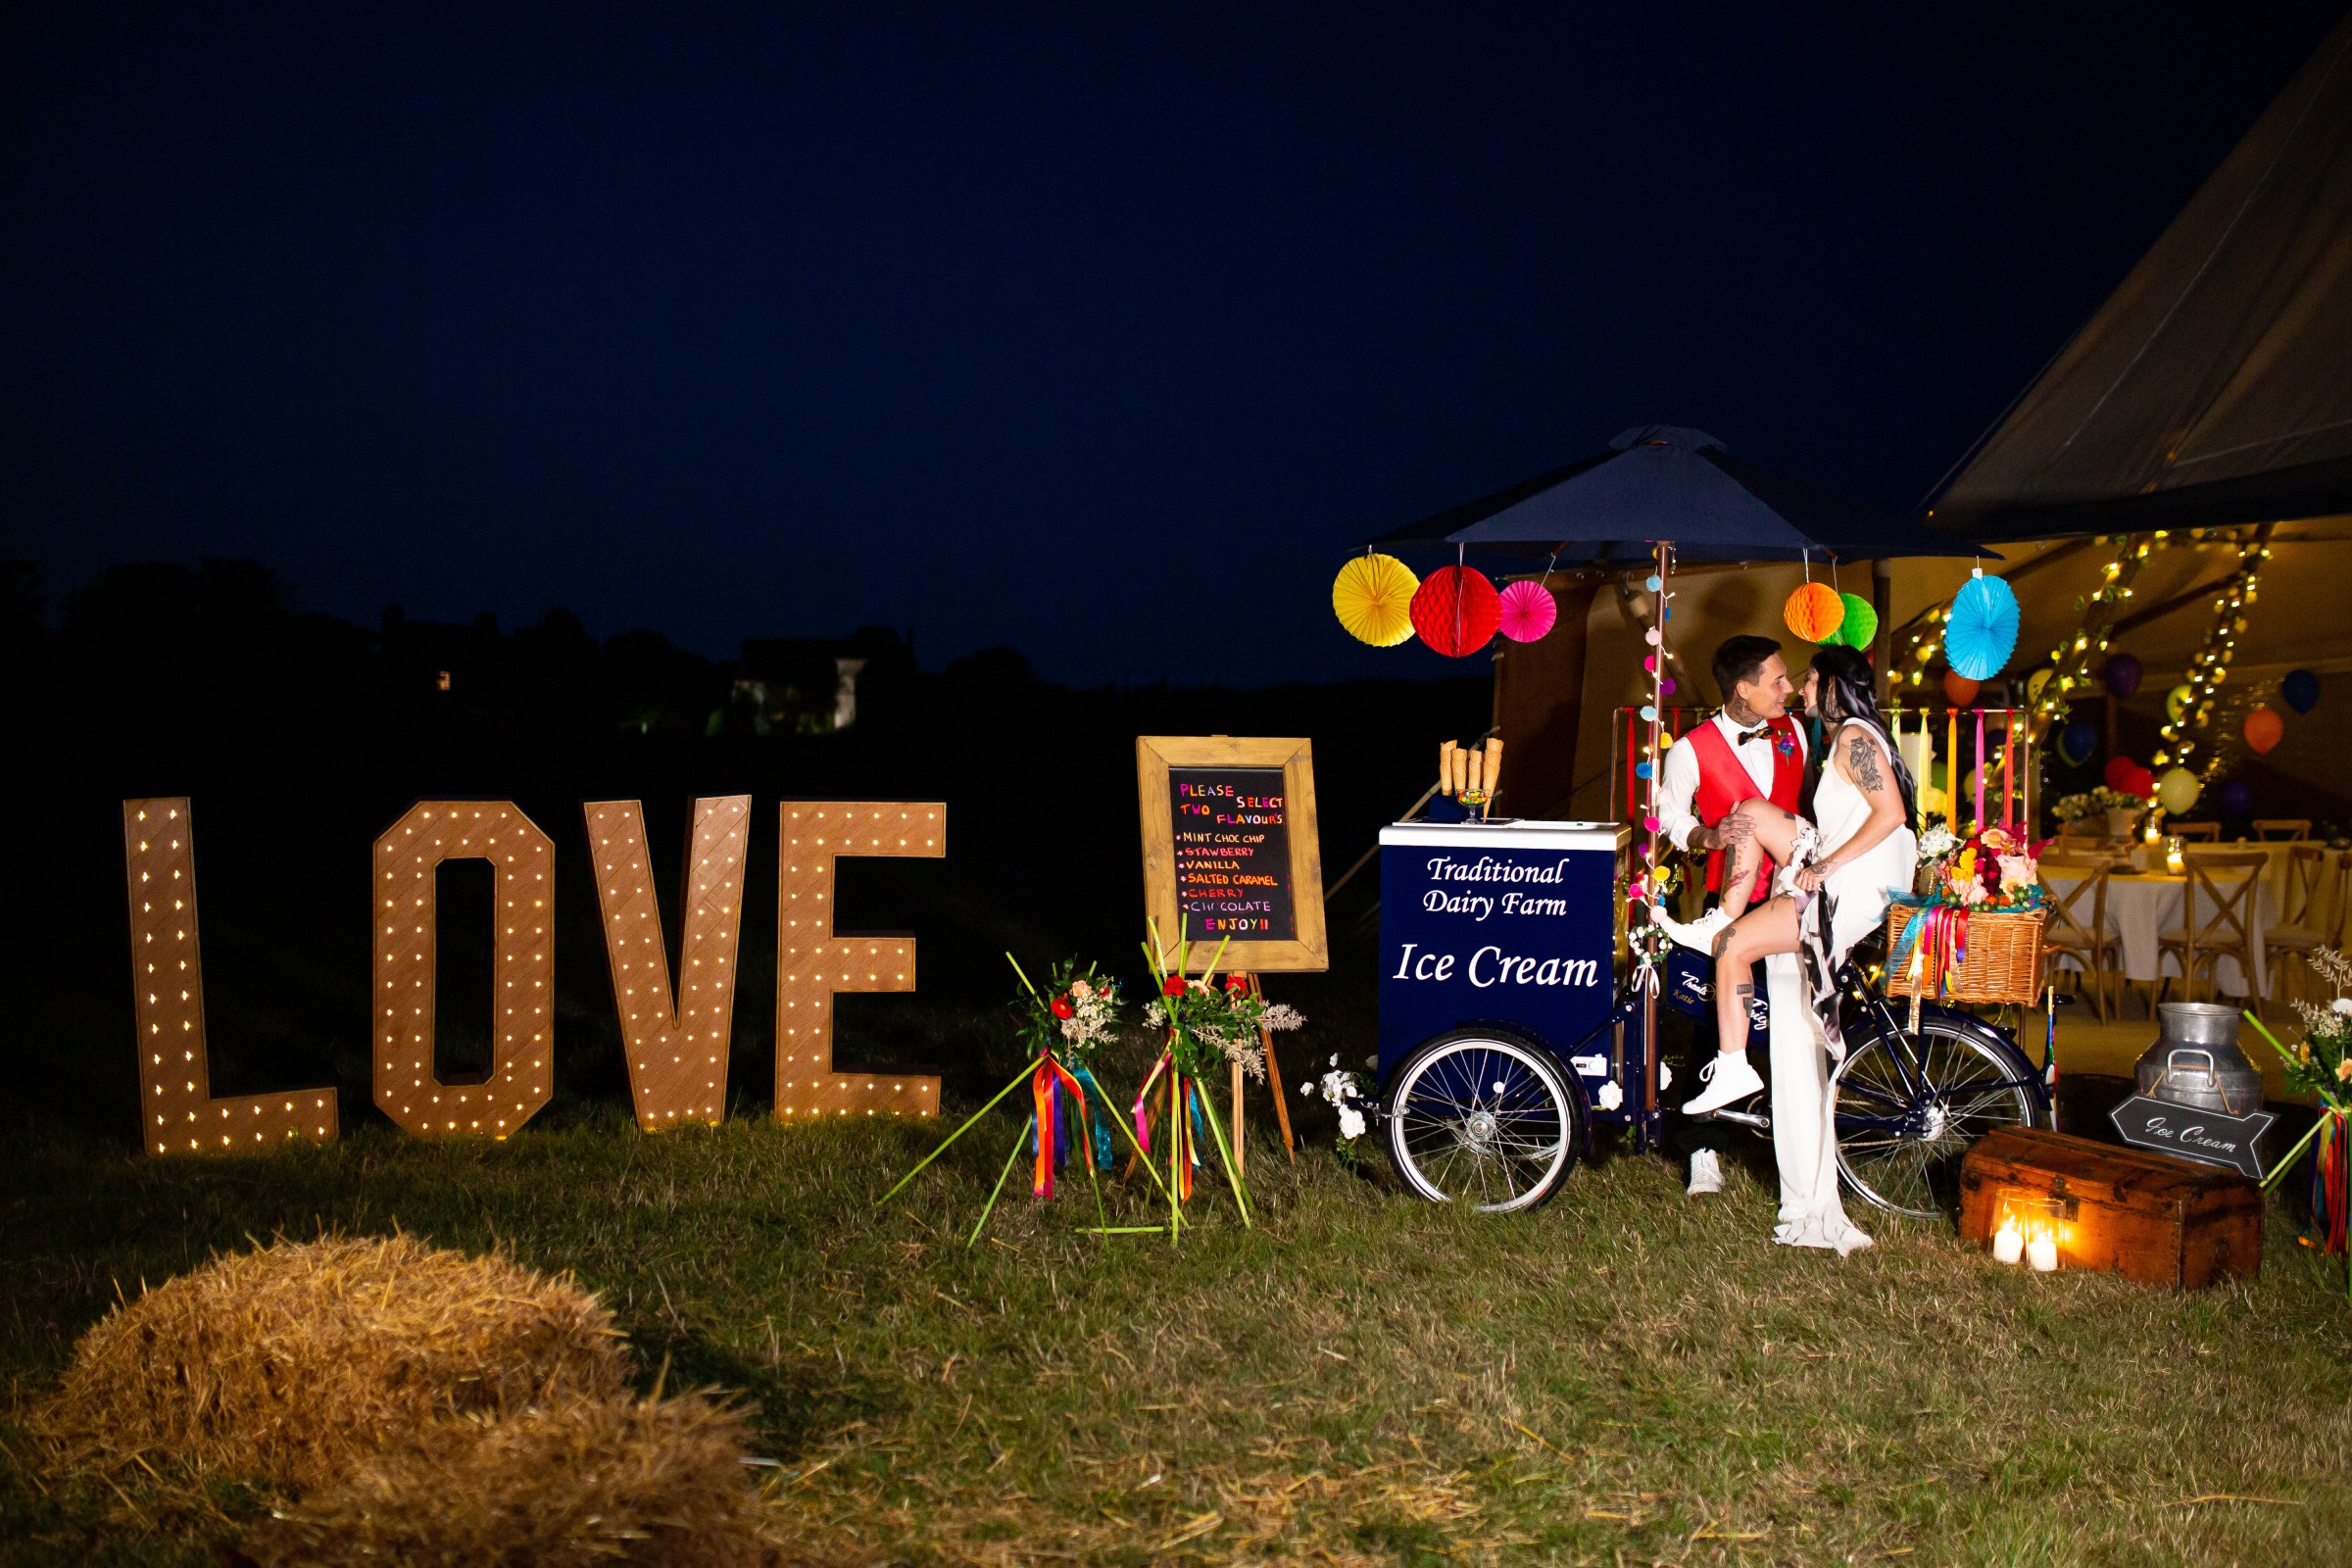 rainbow festival wedding - colourful wedding - quirky wedding ideas - love light up sign - wedding ice cream cart